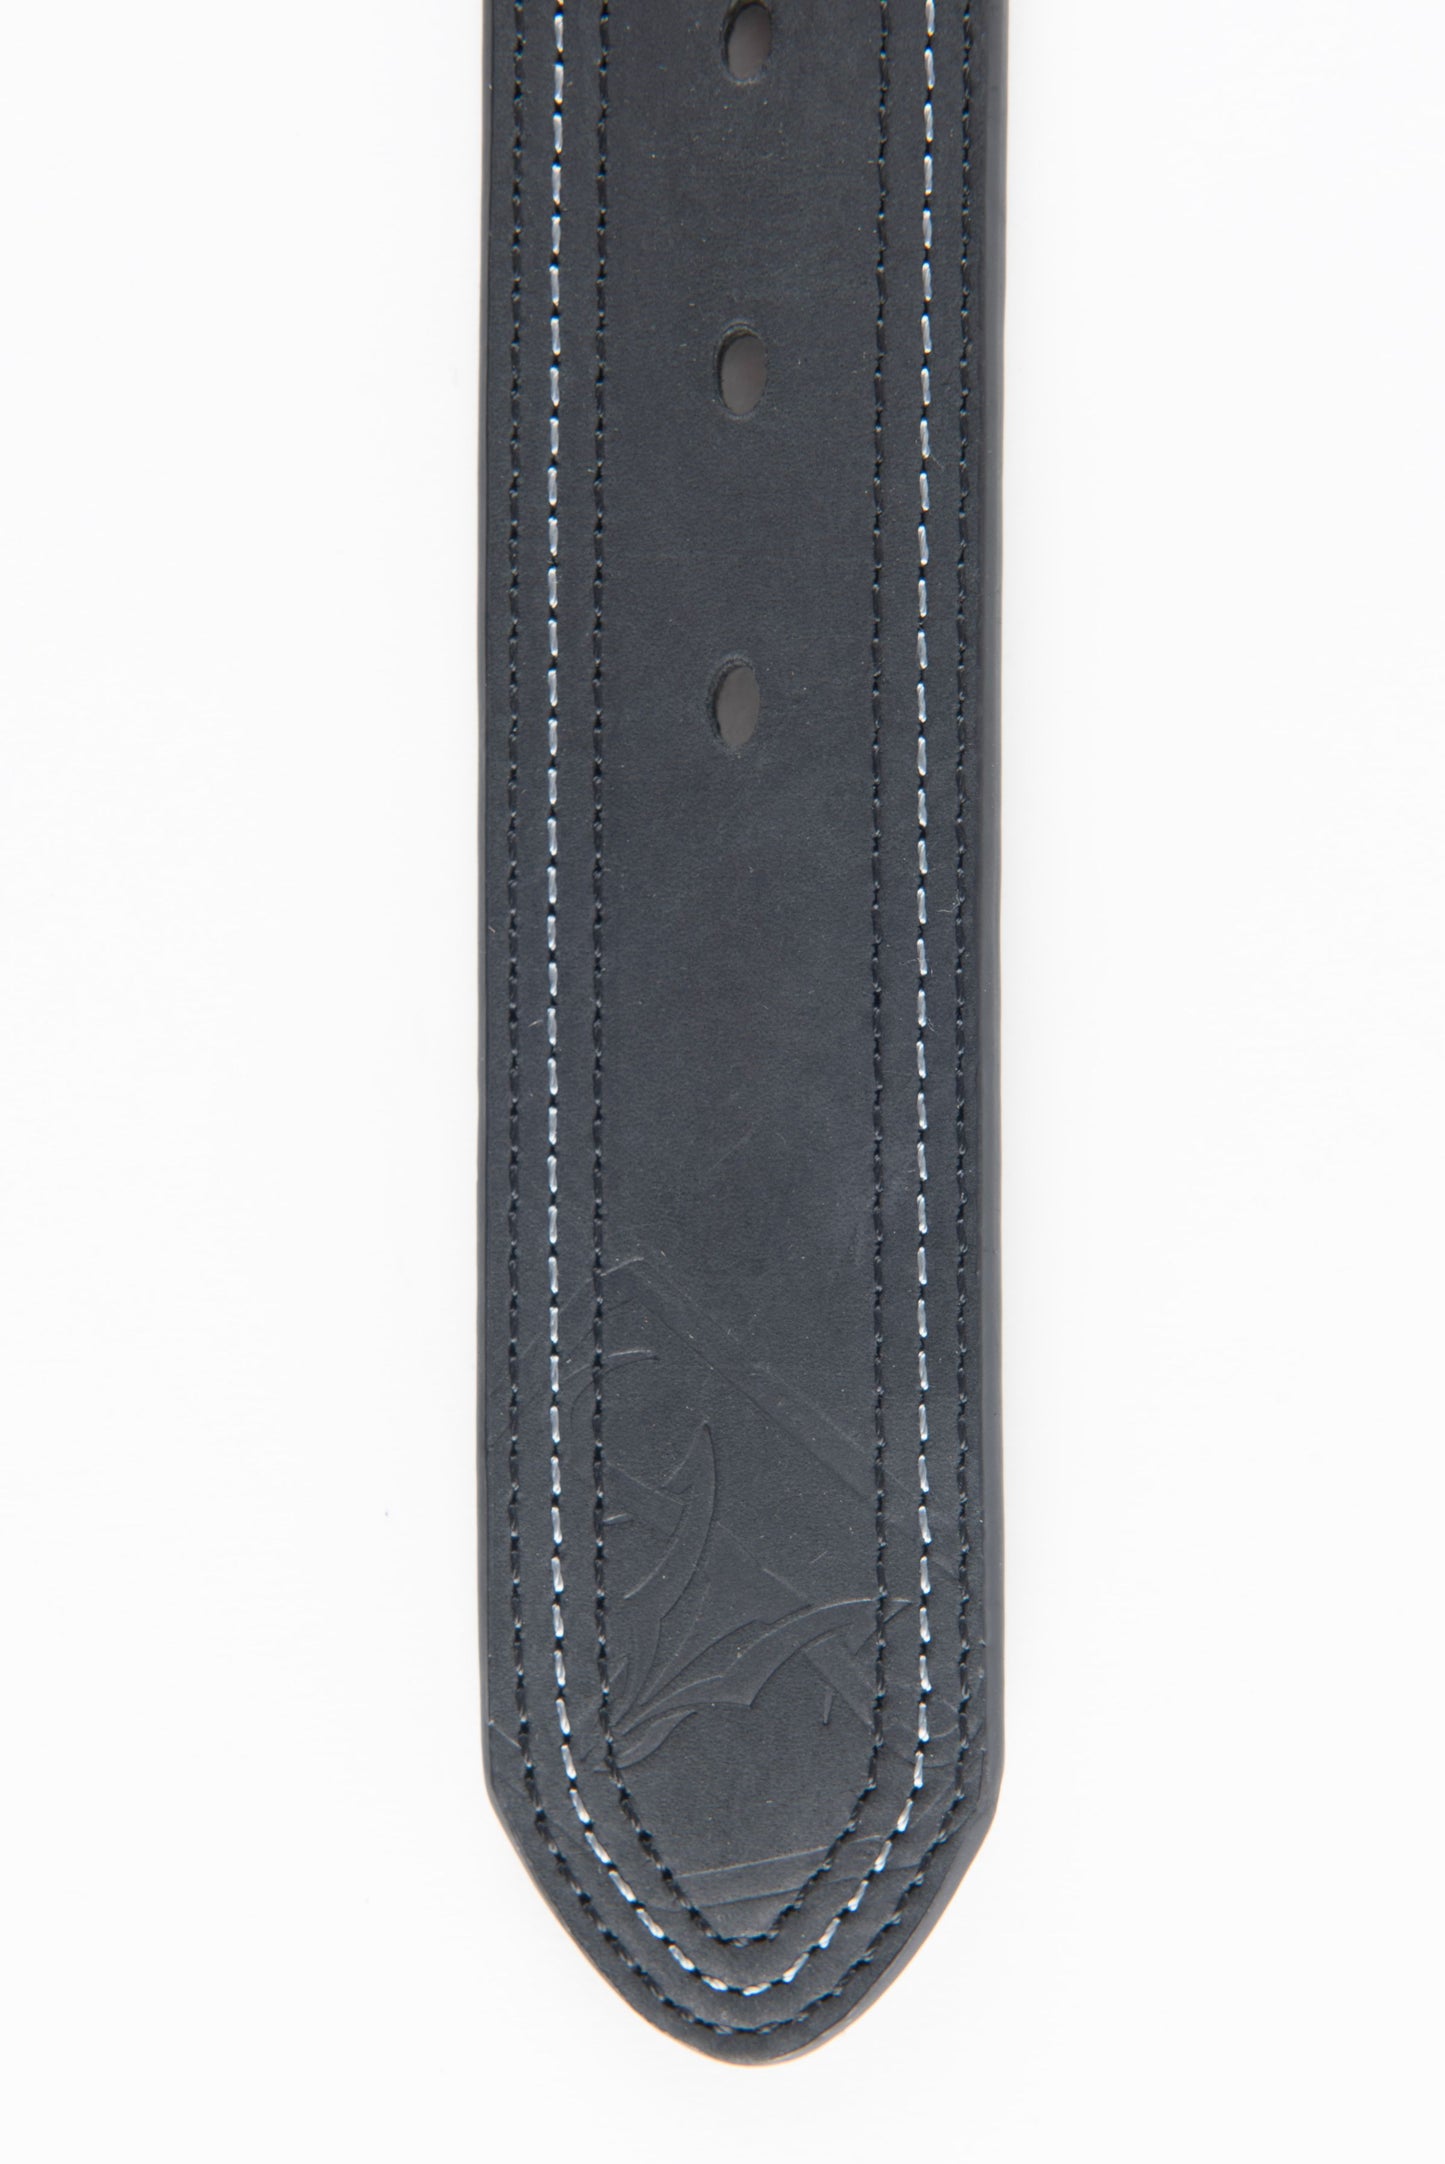 Mens Genuine Leather Aztec Embroidery Belt - Black